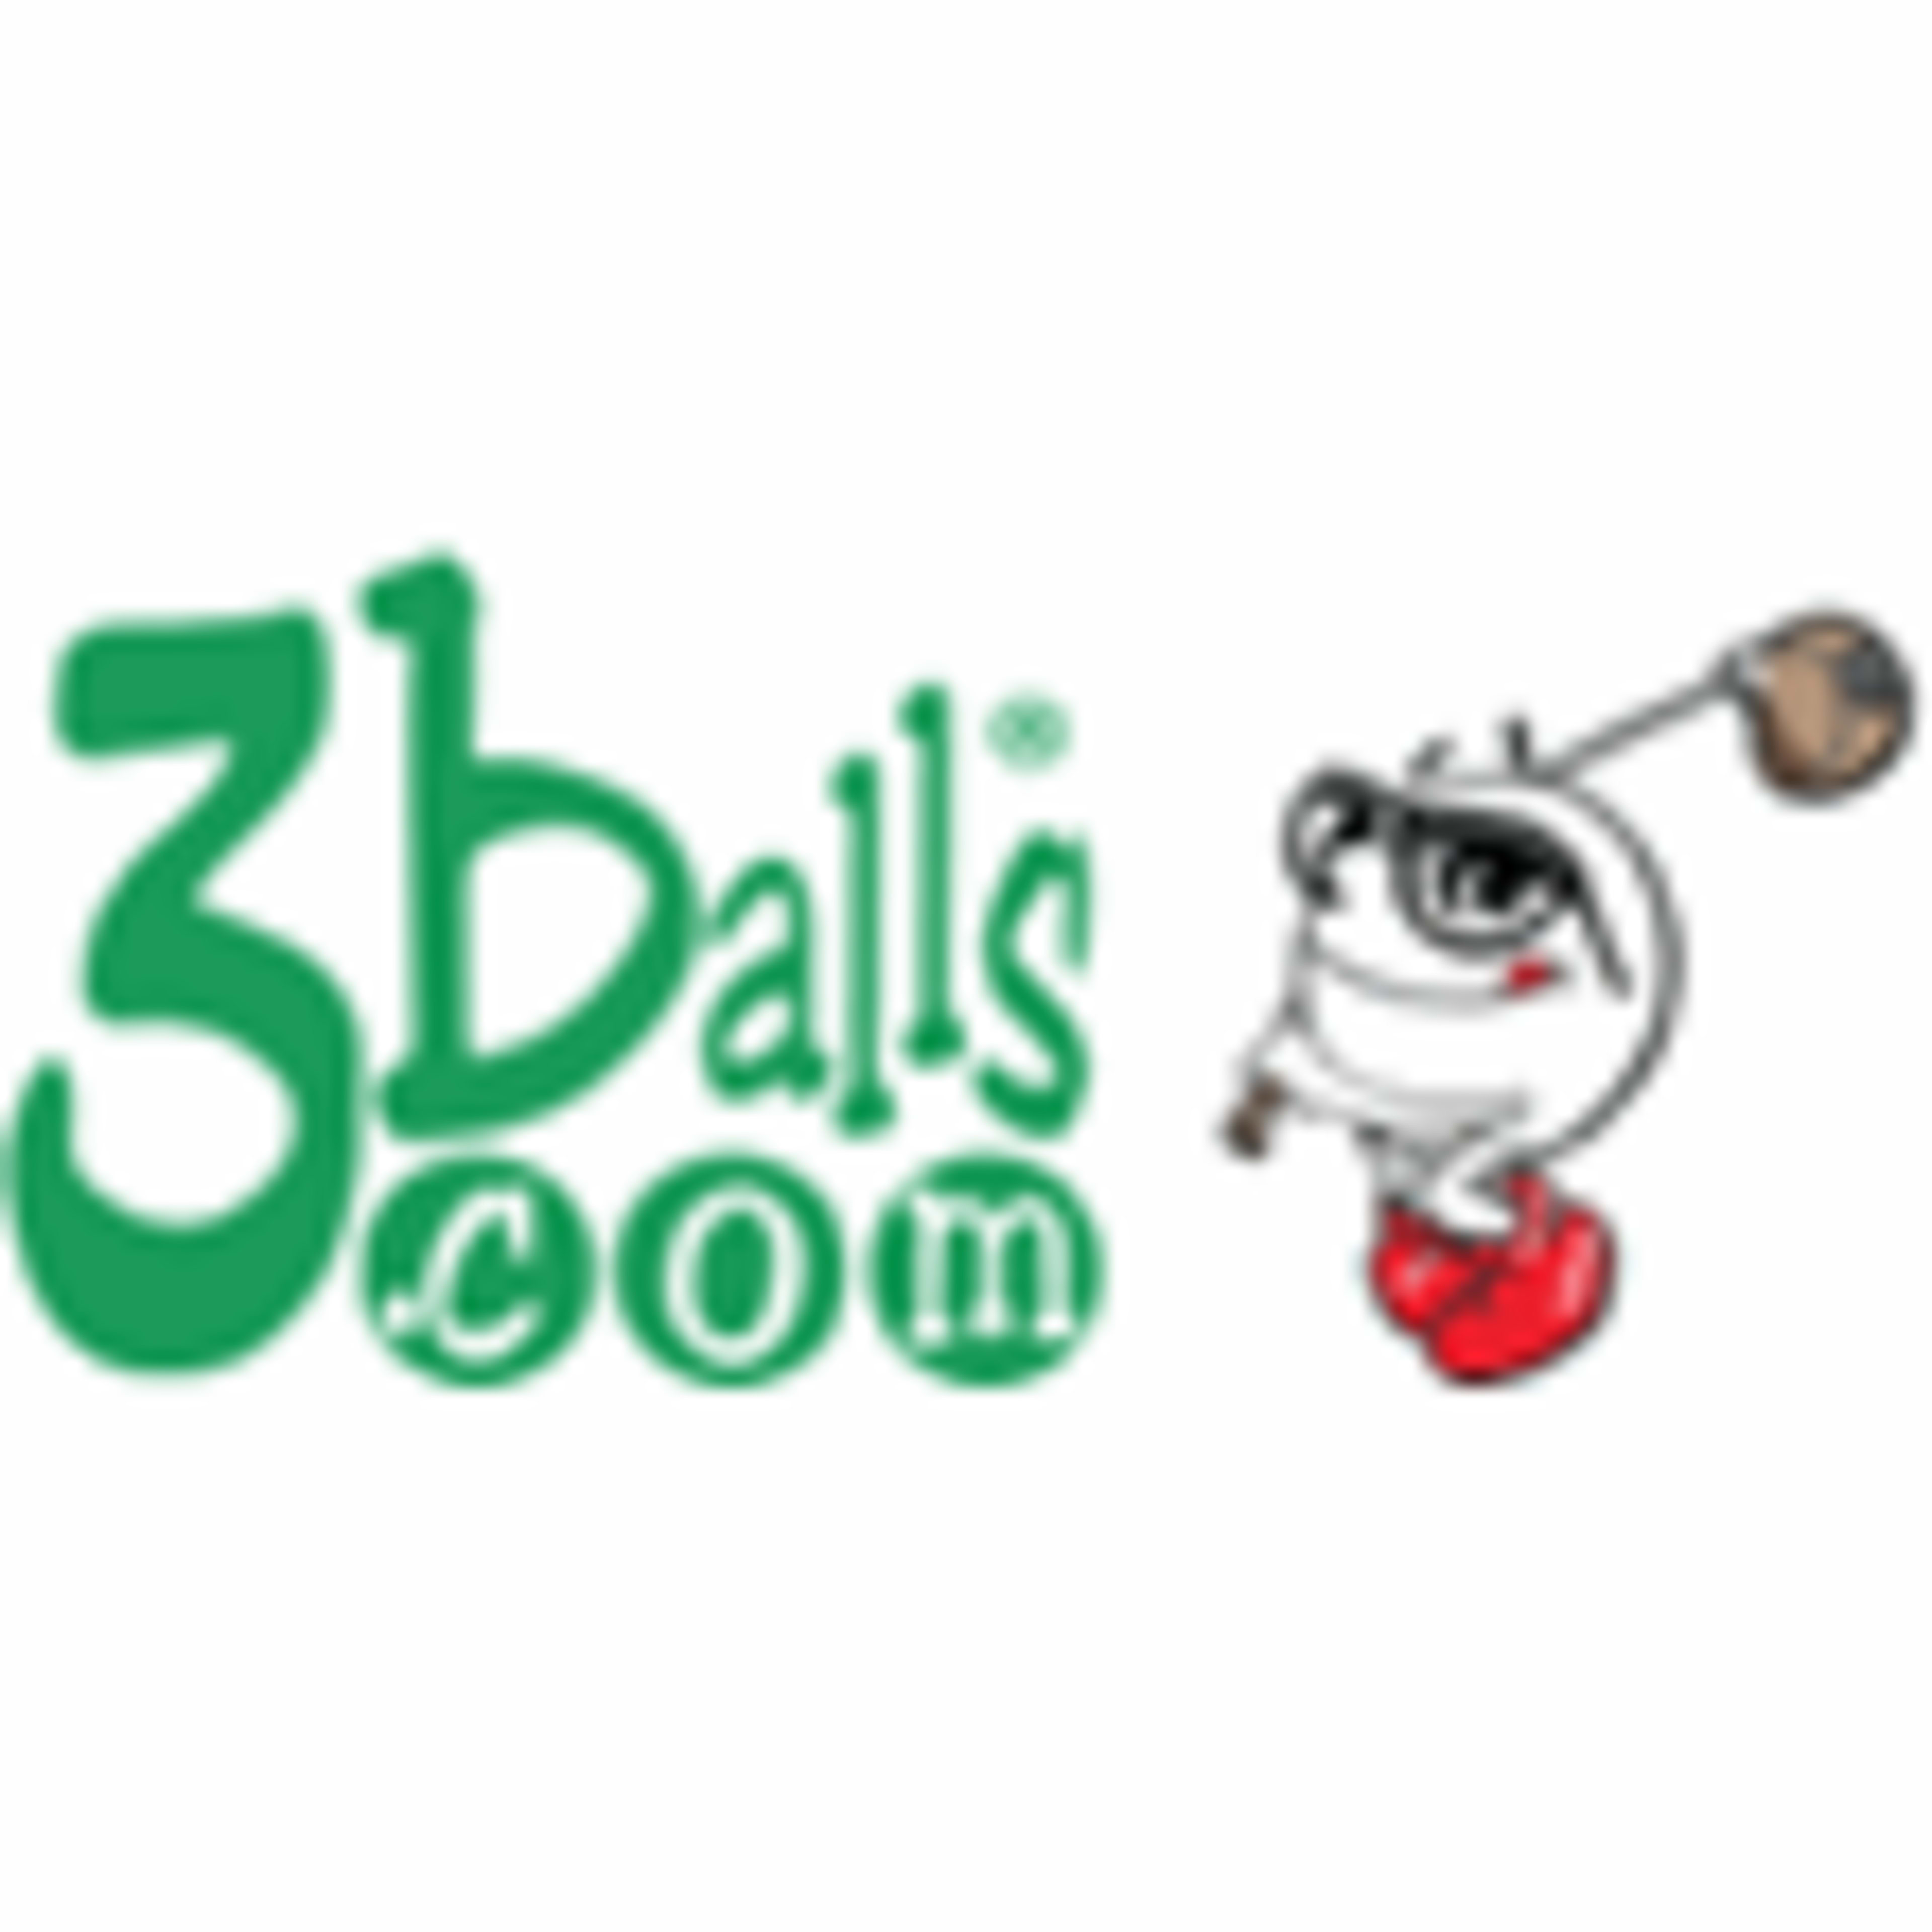 3balls GolfCode